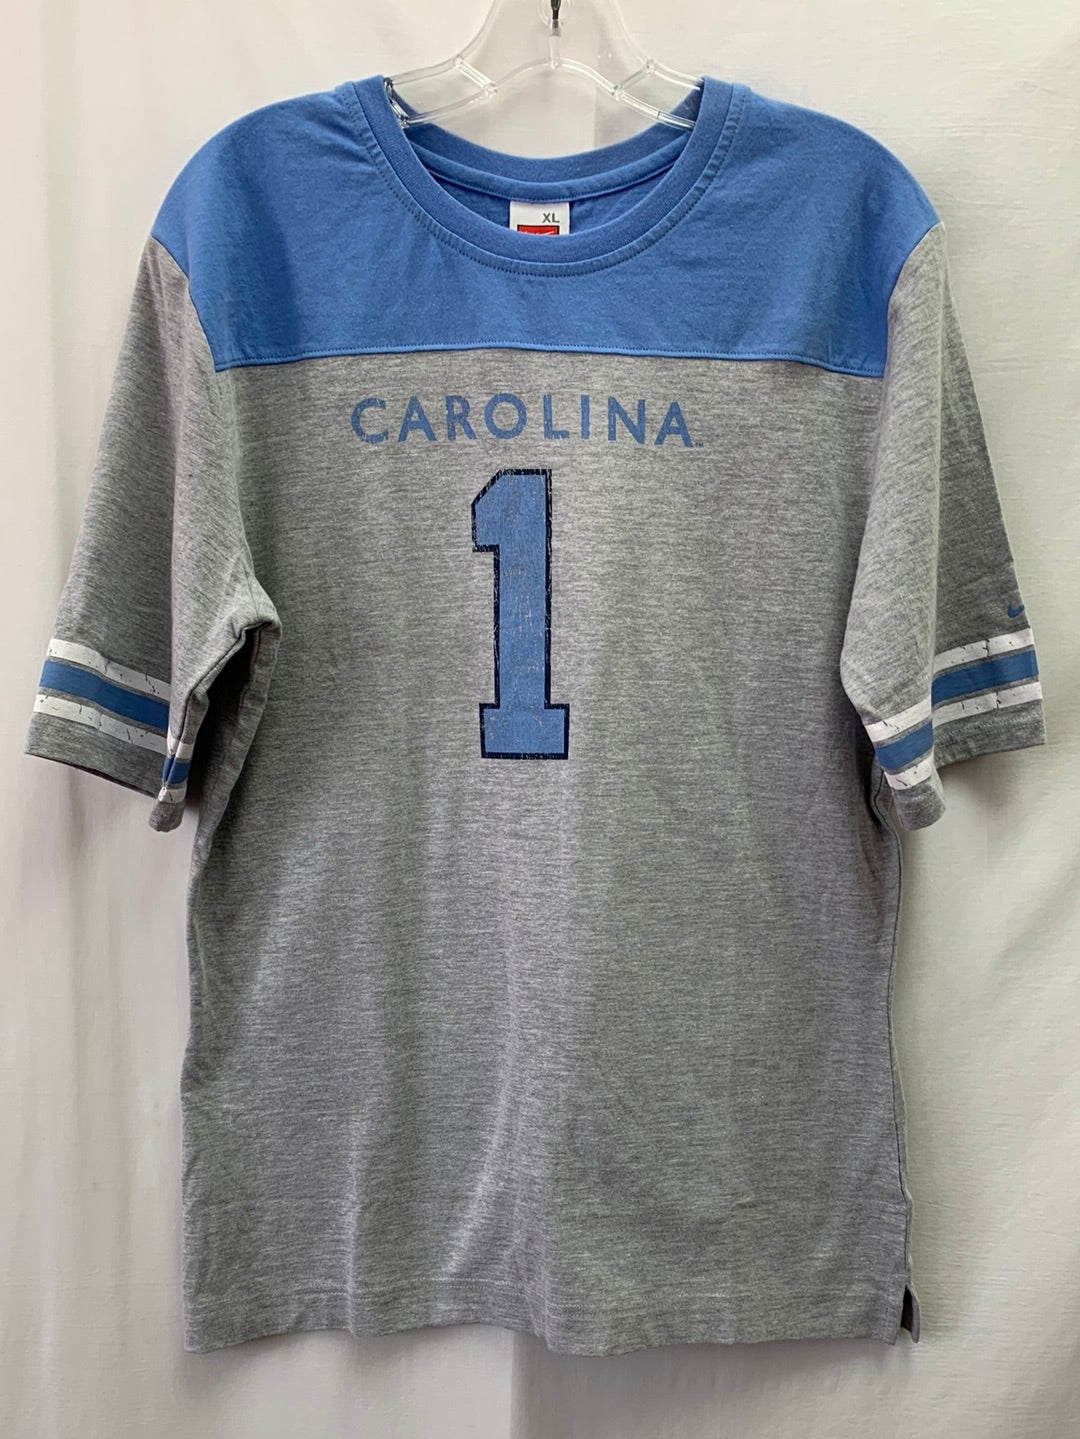 NWT - NIKE blue gray "CAROLINA 1" Short Sleeve Shirt - XL